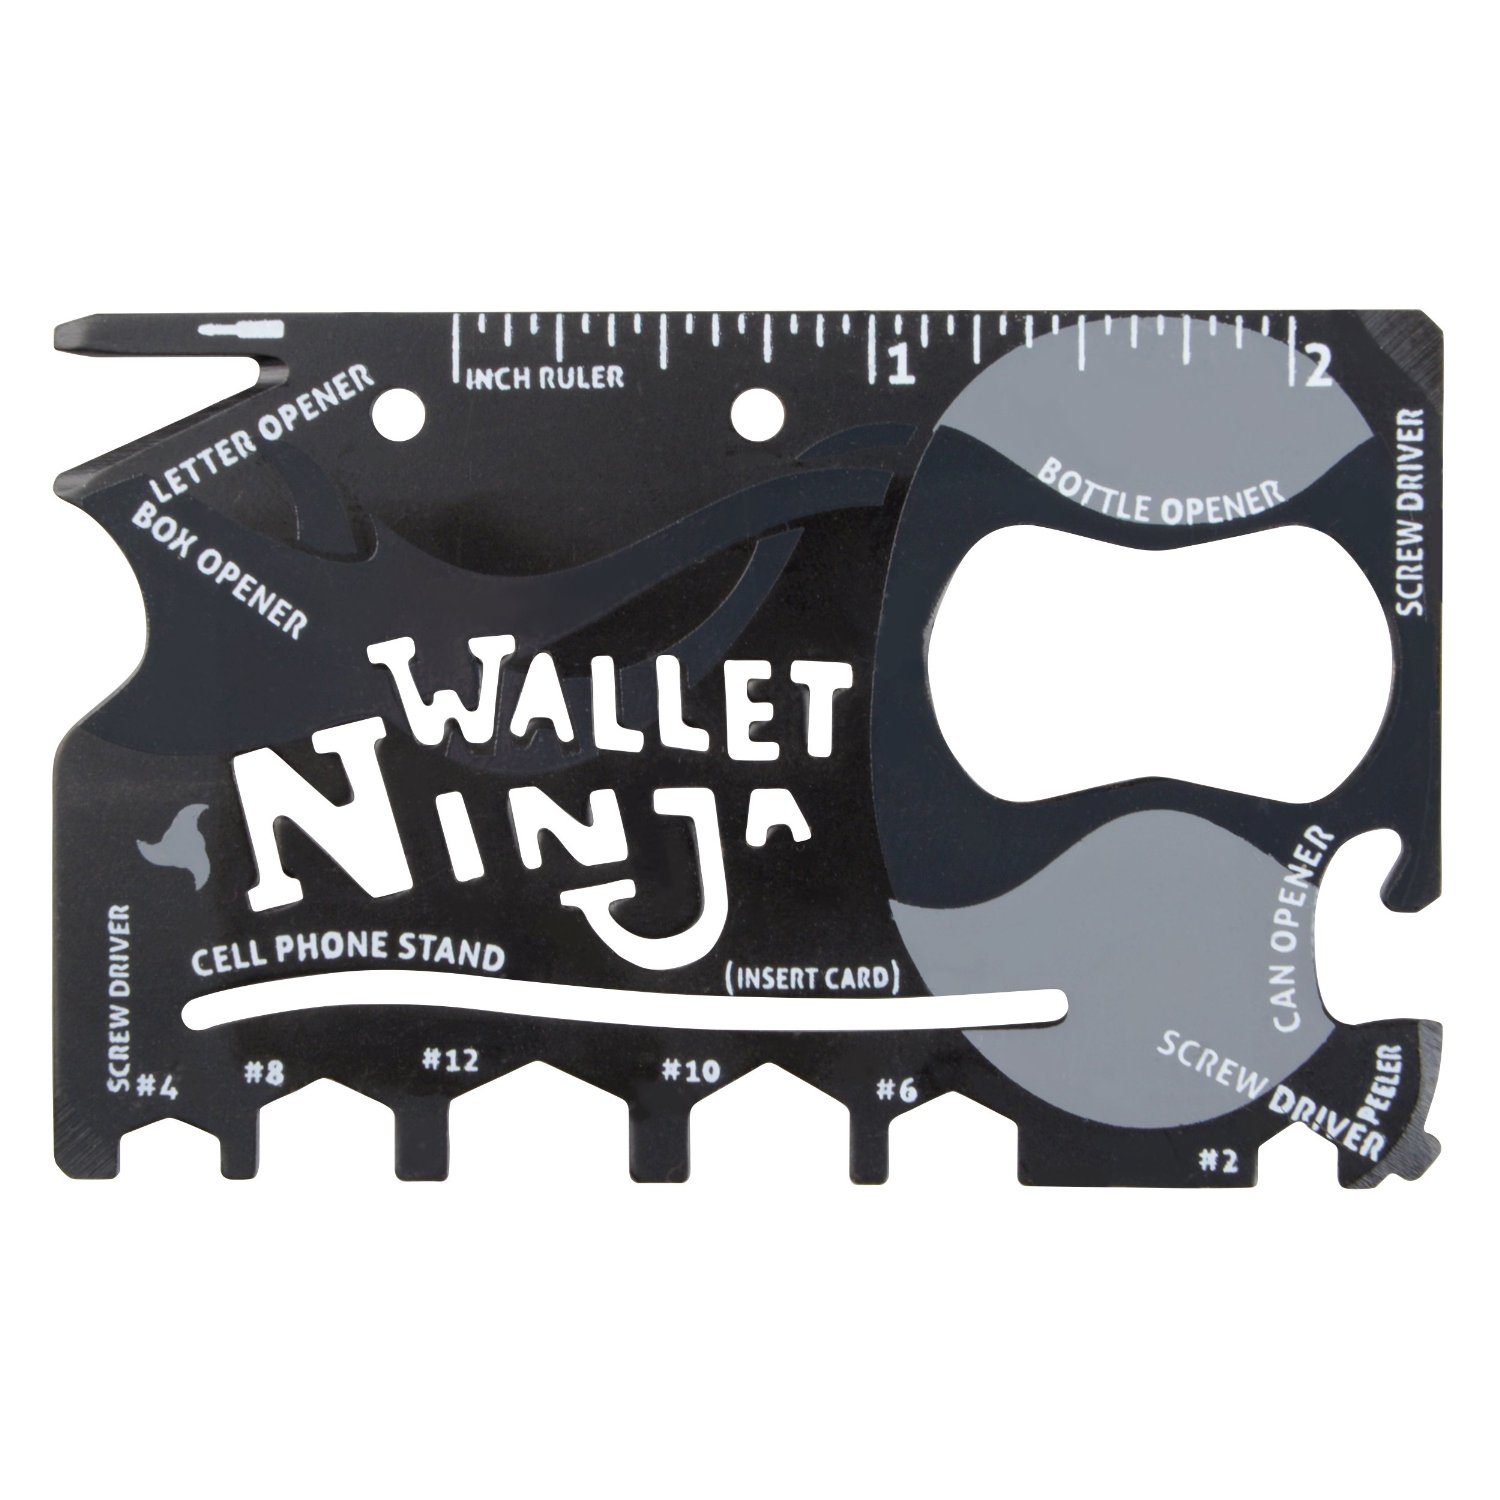 Wallet Ninja 18 in 1 Multi-purpose Pocket Tool